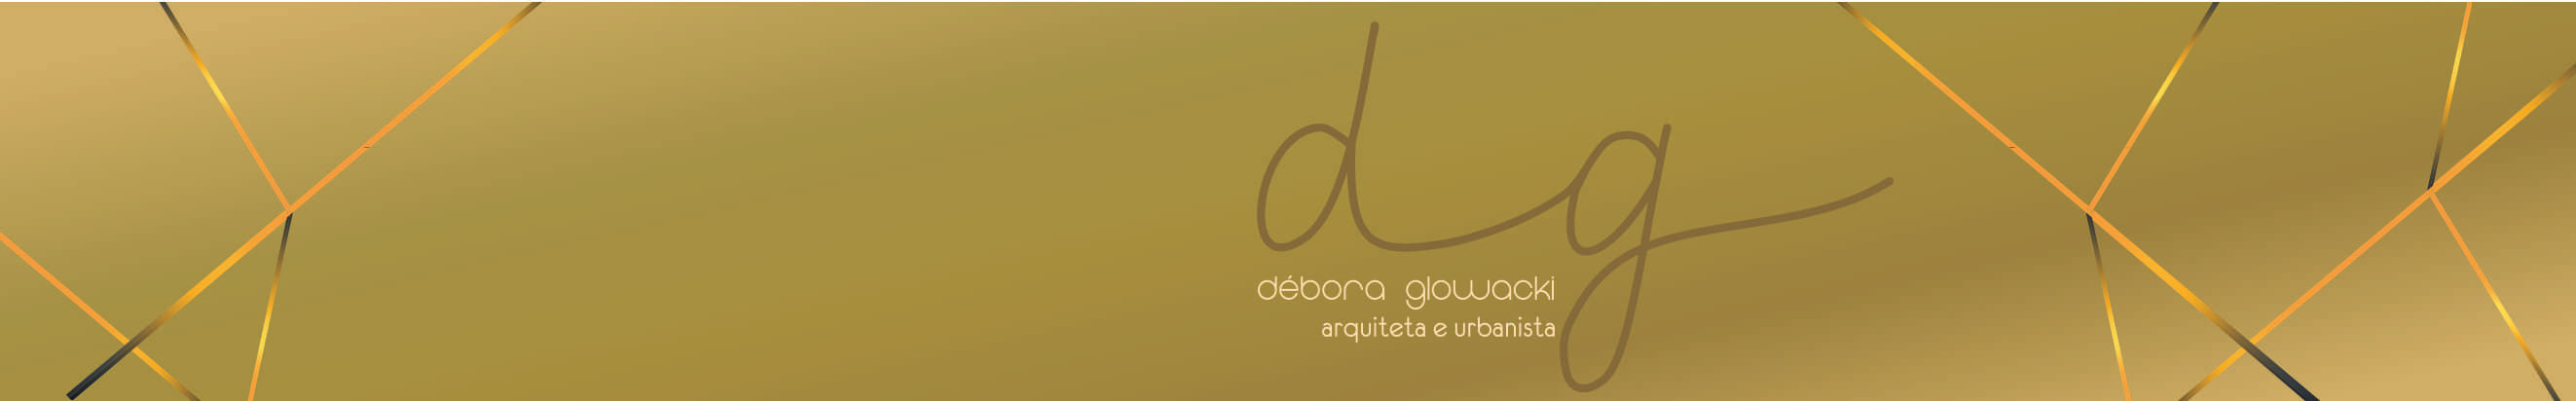 Débora Glowacki's profile banner